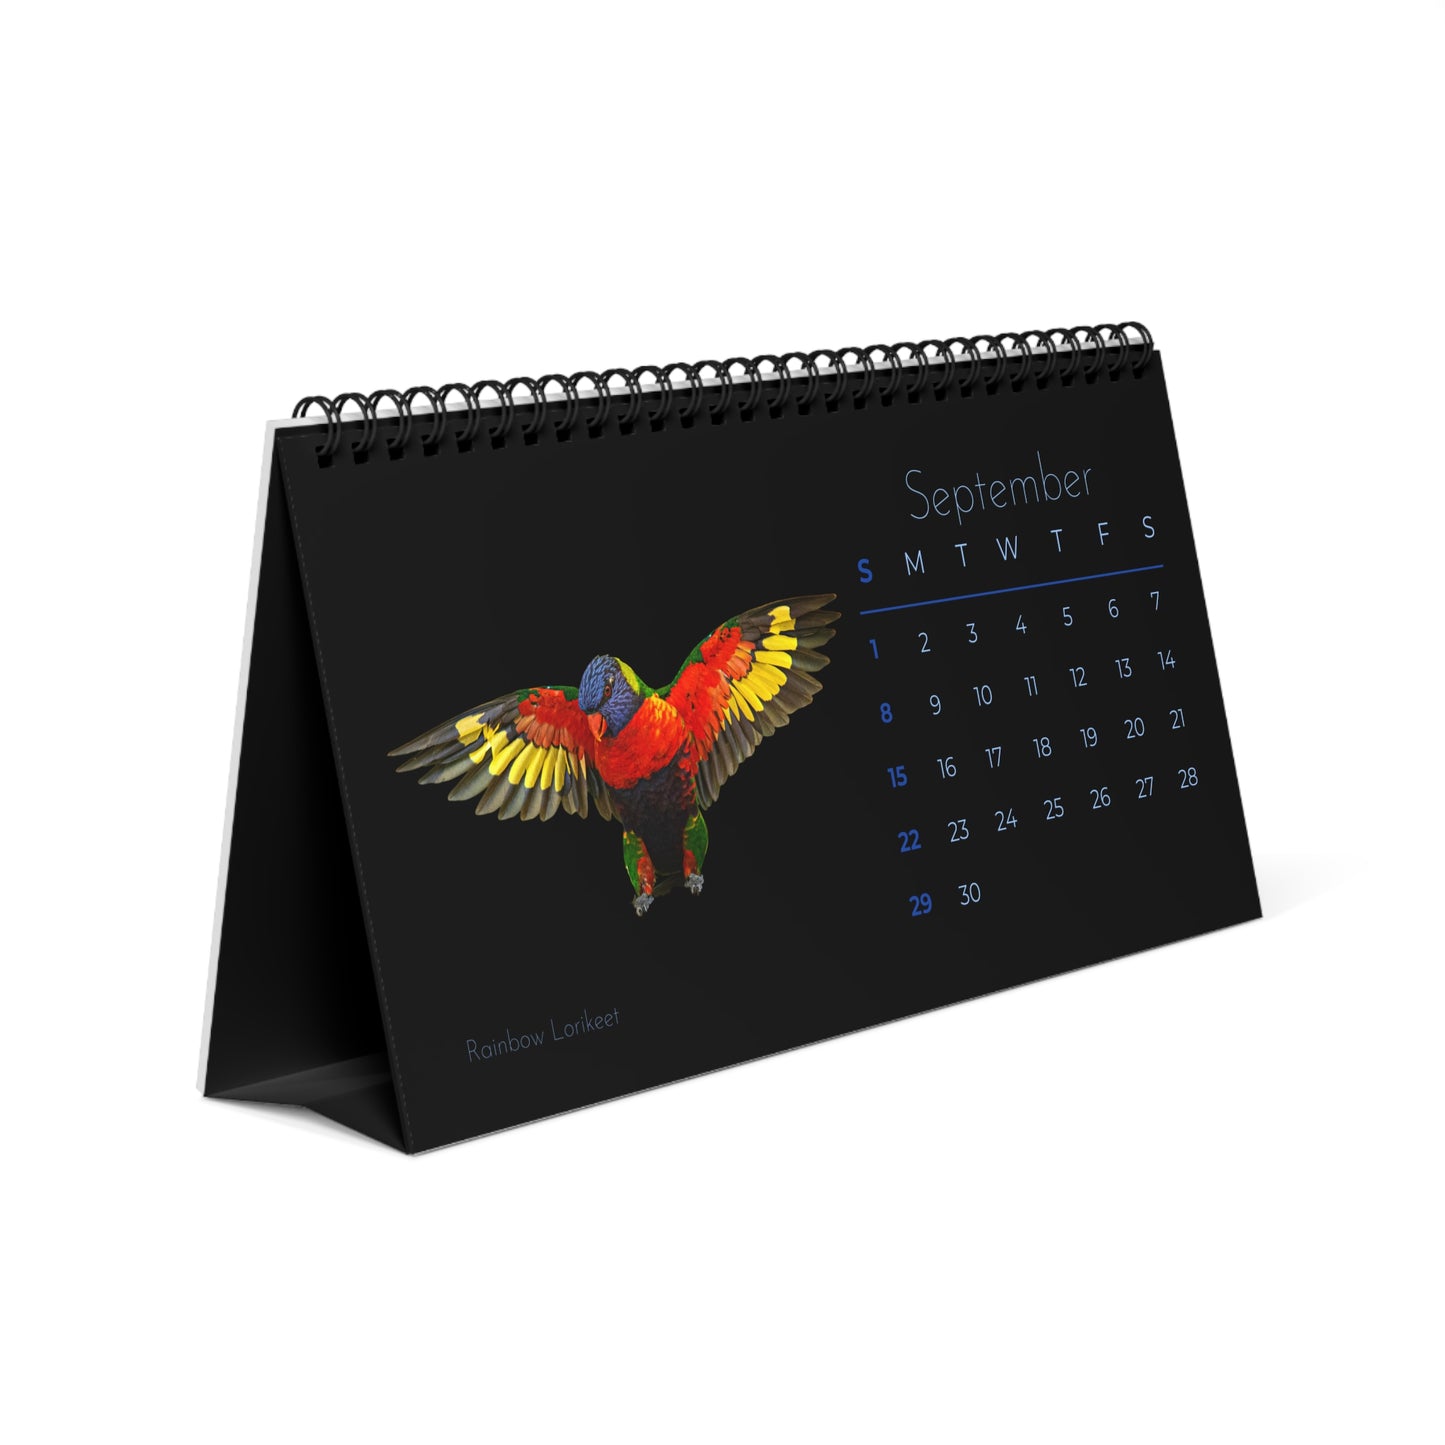 Brilliant Birds of 2024 Desk Calendar